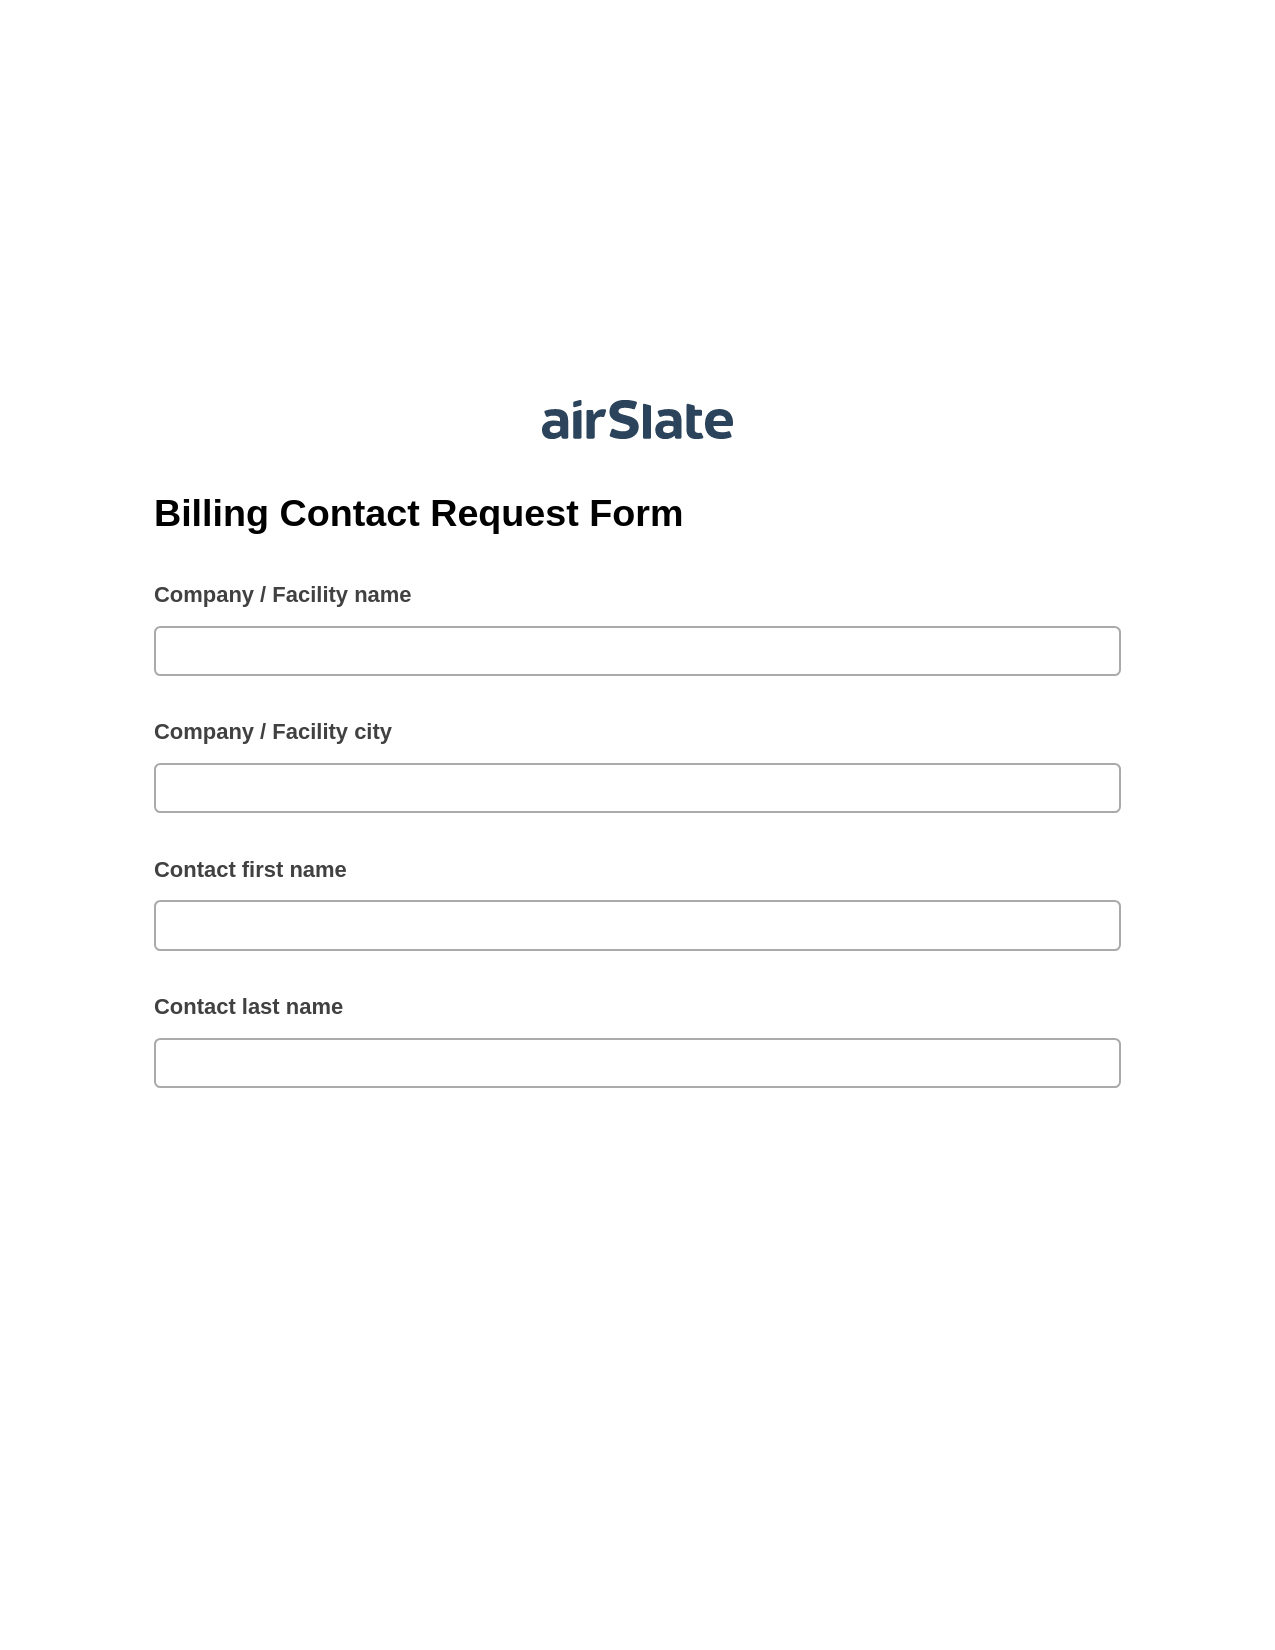 Multirole Billing Contact Request Form Pre-fill from CSV File Bot, Jira Bot, Slack Notification Postfinish Bot